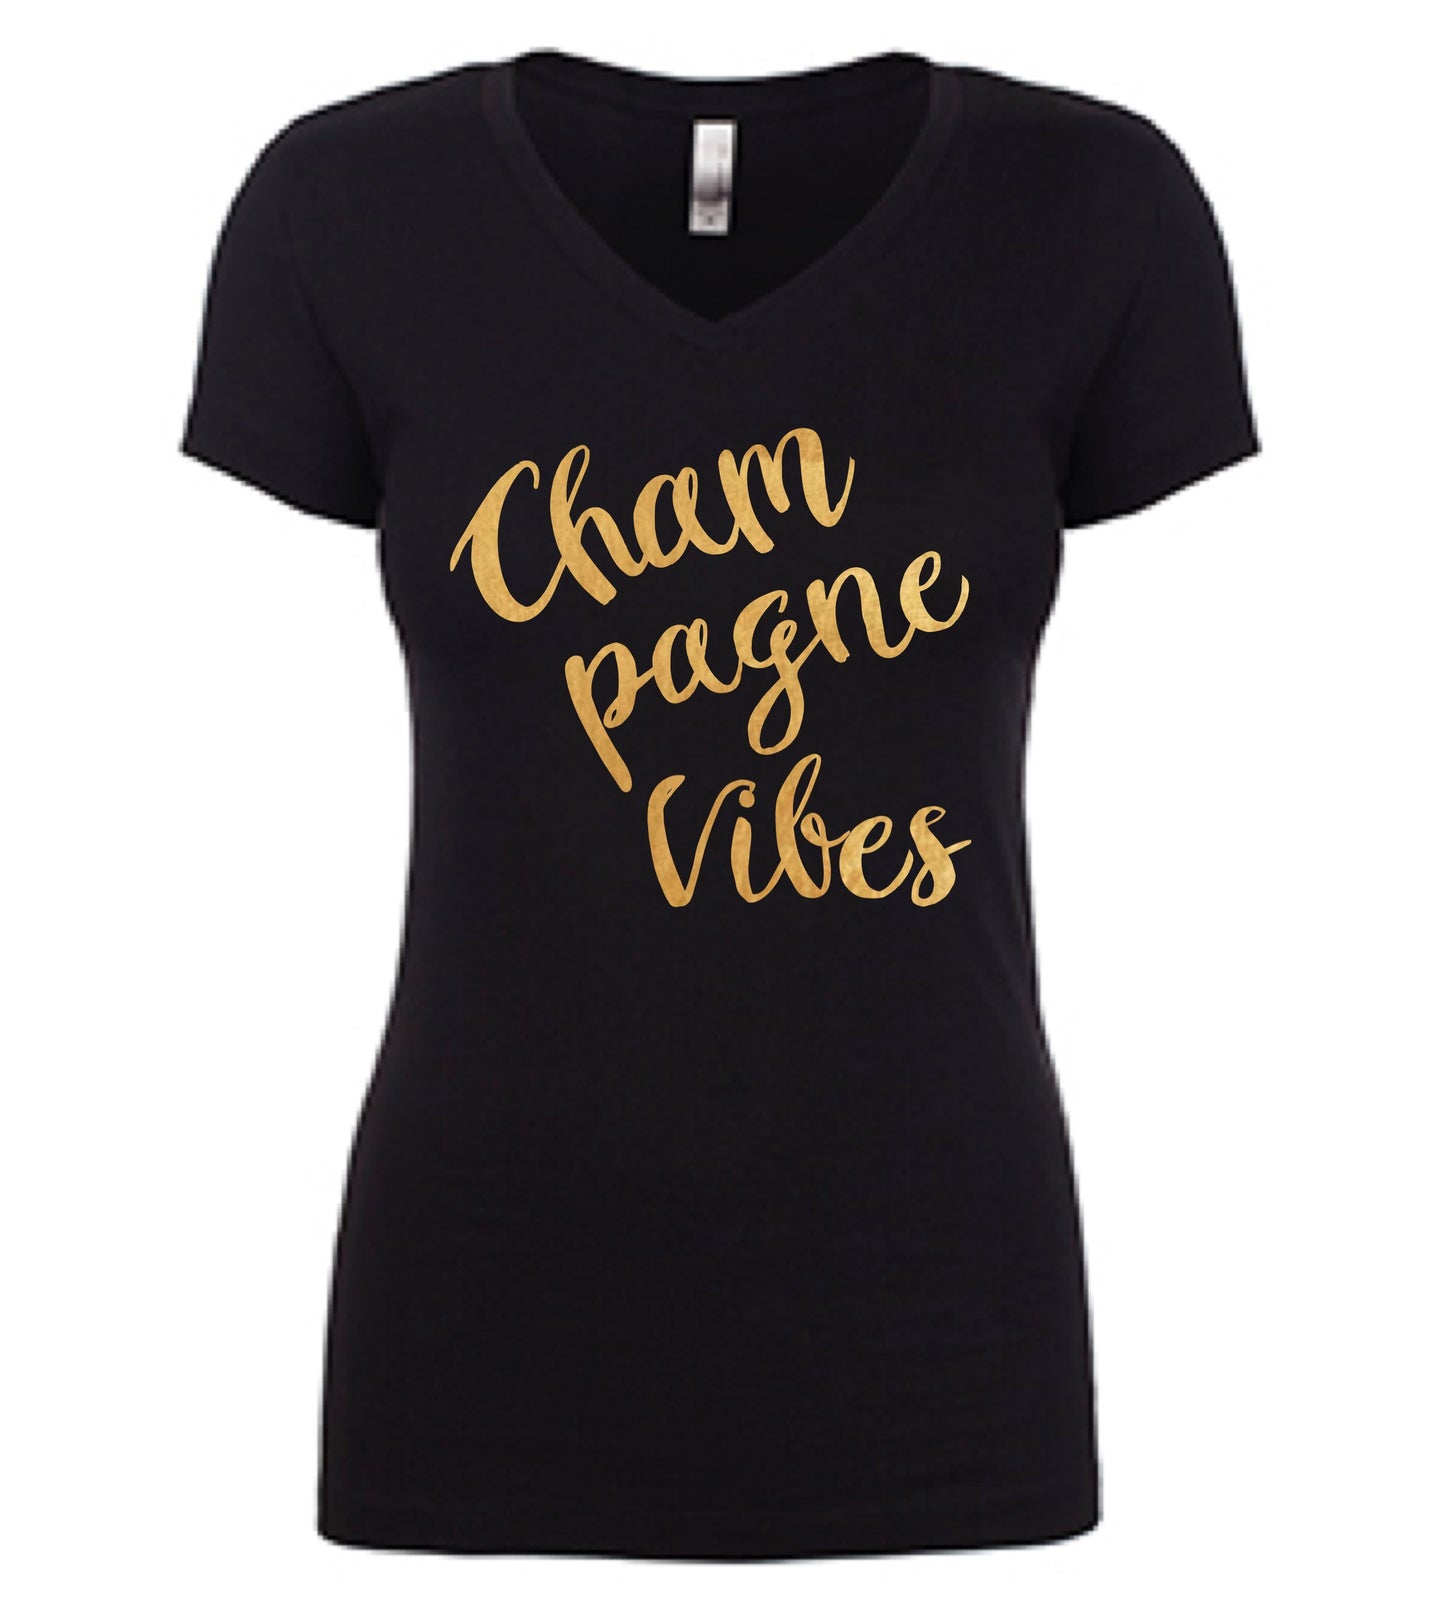 Champagne vibes shirt| Bride and Bridesmaid Shirts| Bride shirts| Bridesmaid Shirts| Bachelorette party shirts| pub crawl shirt| wine lover